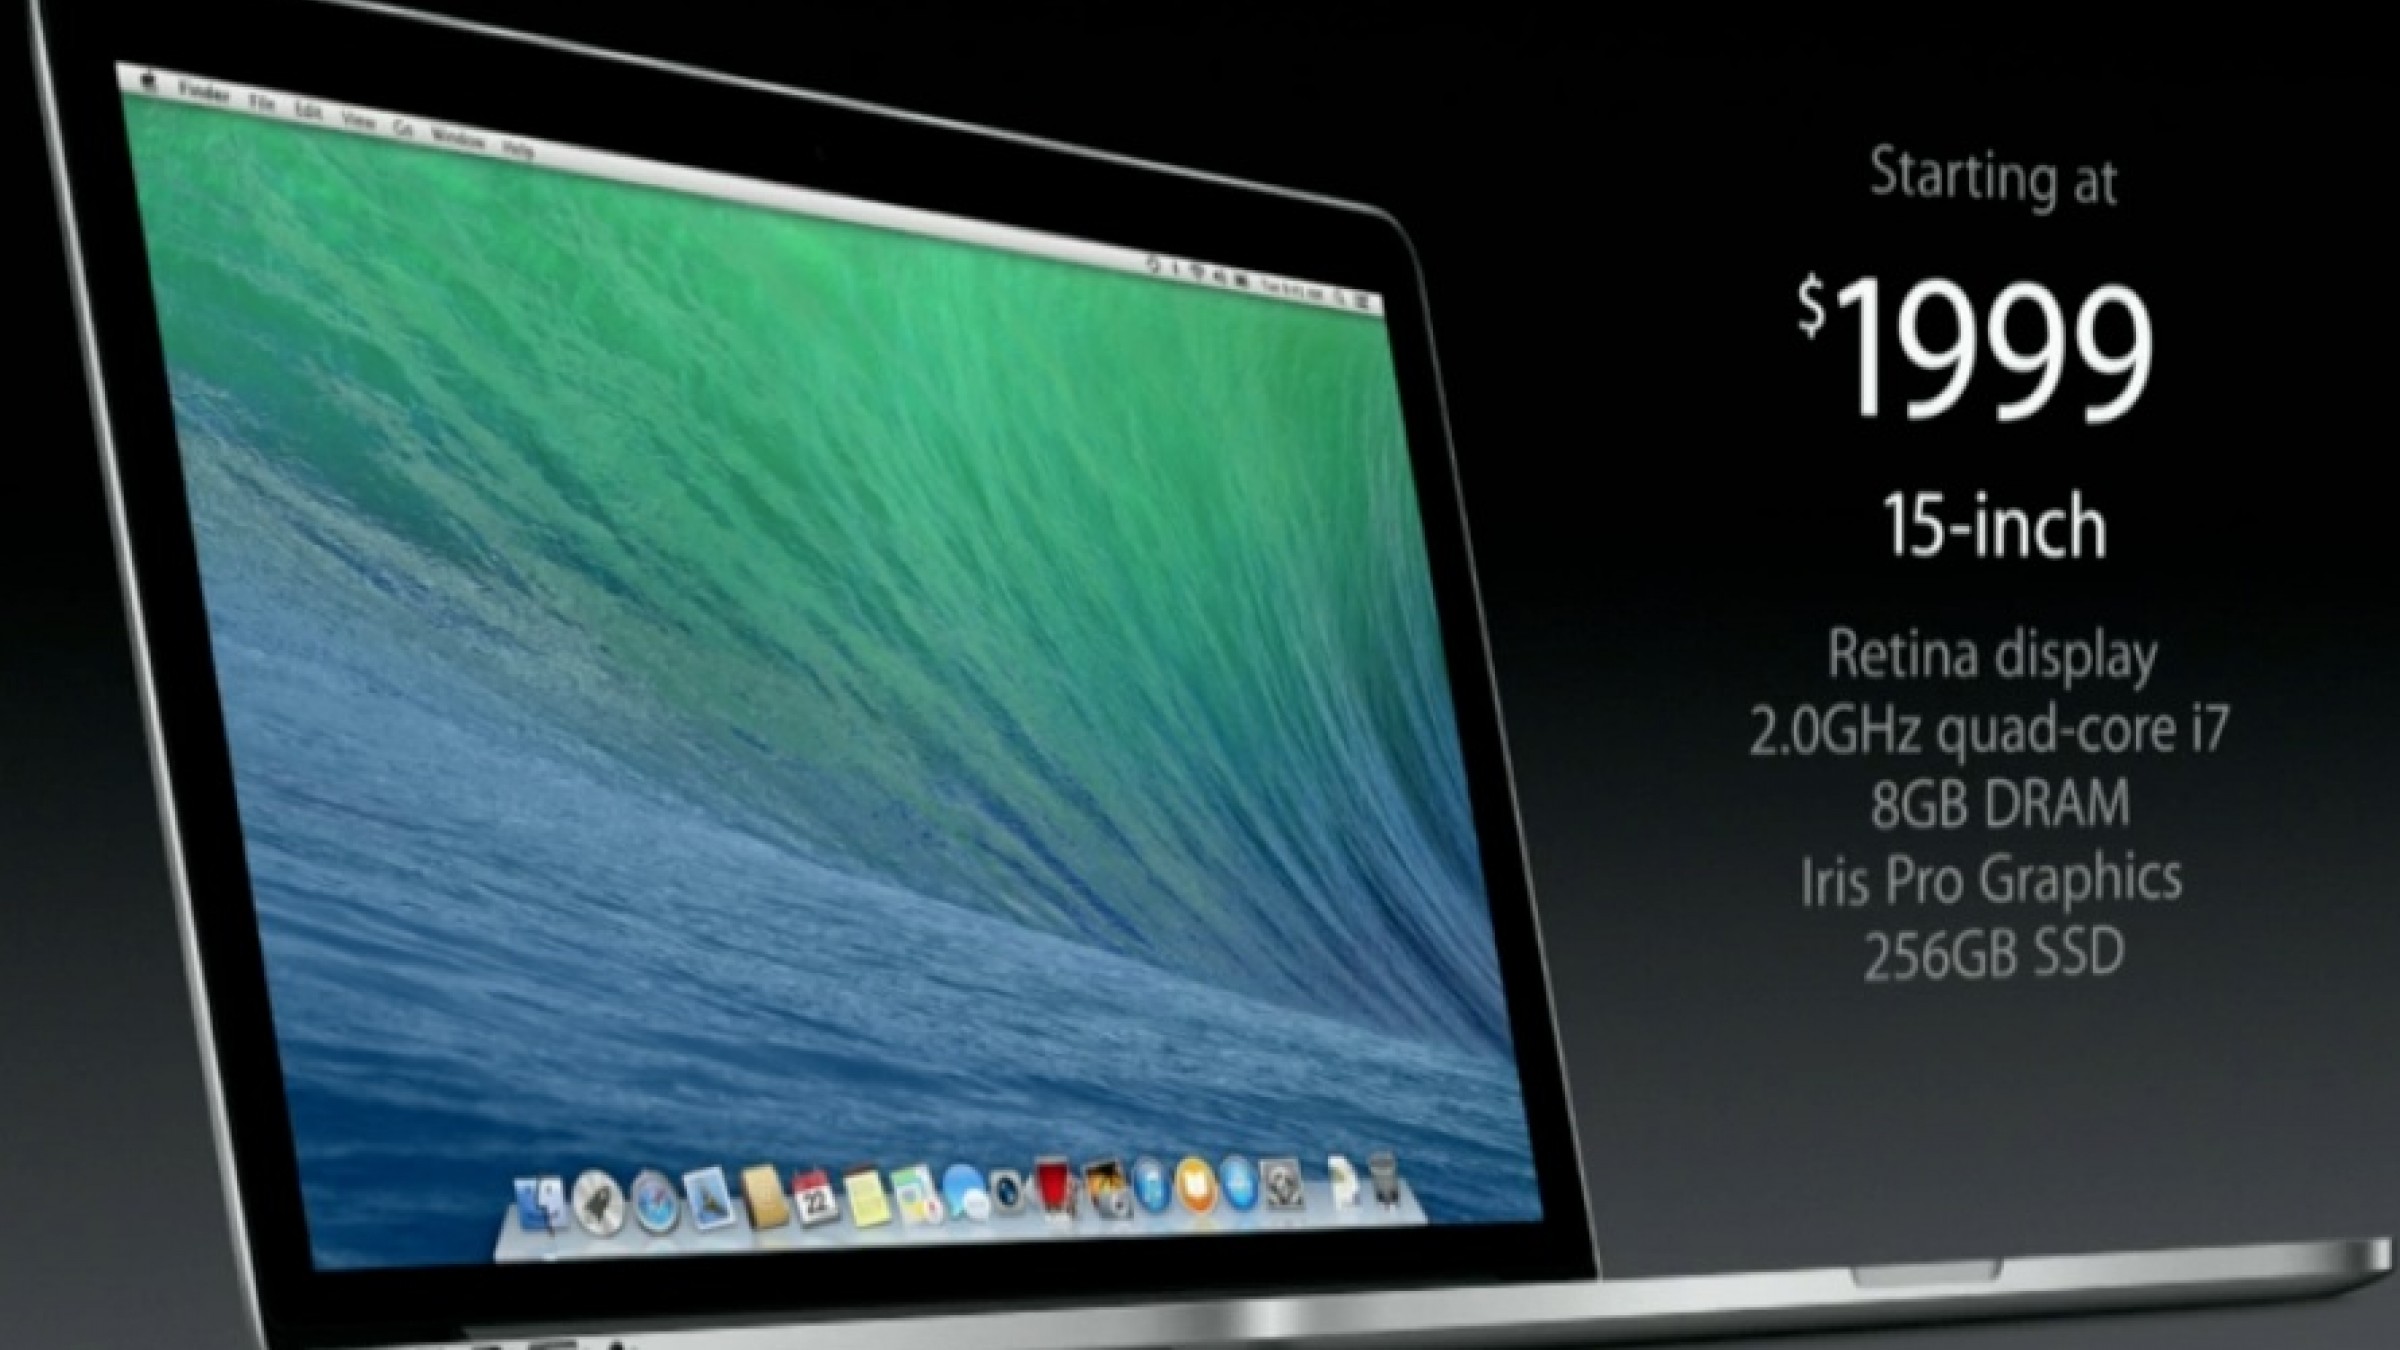 Mac Version 10.9.0 Upgrade